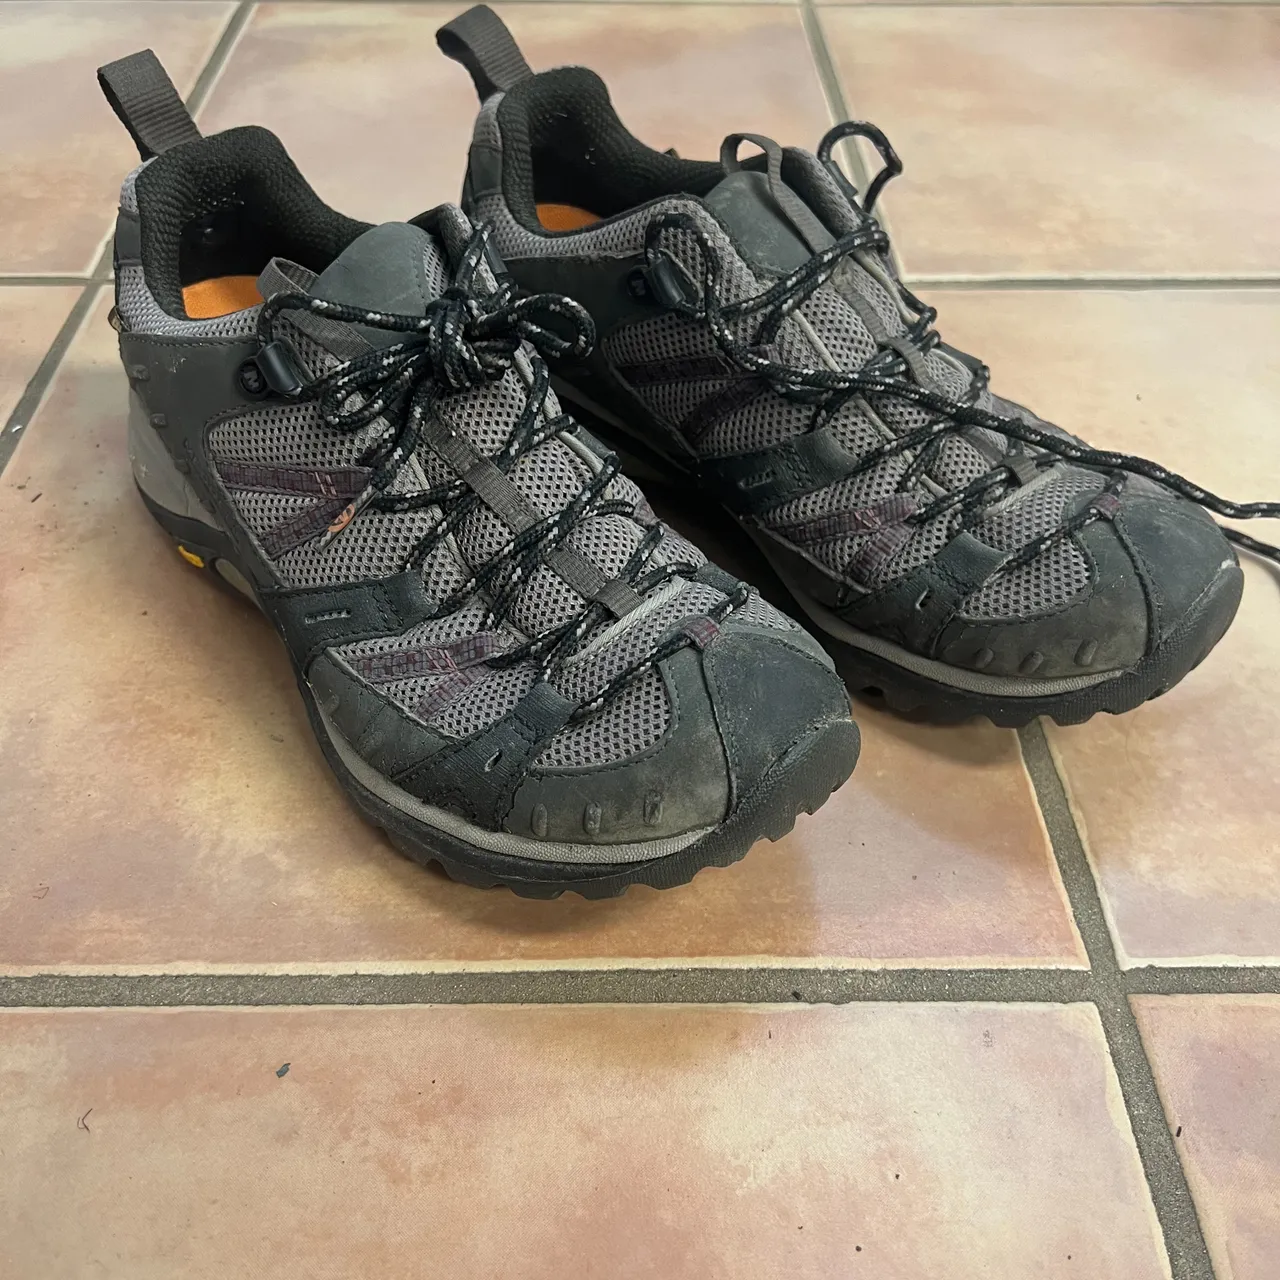 Merrell Continuum Hiking Shoes, Women’s 9.5, GUC photo 1